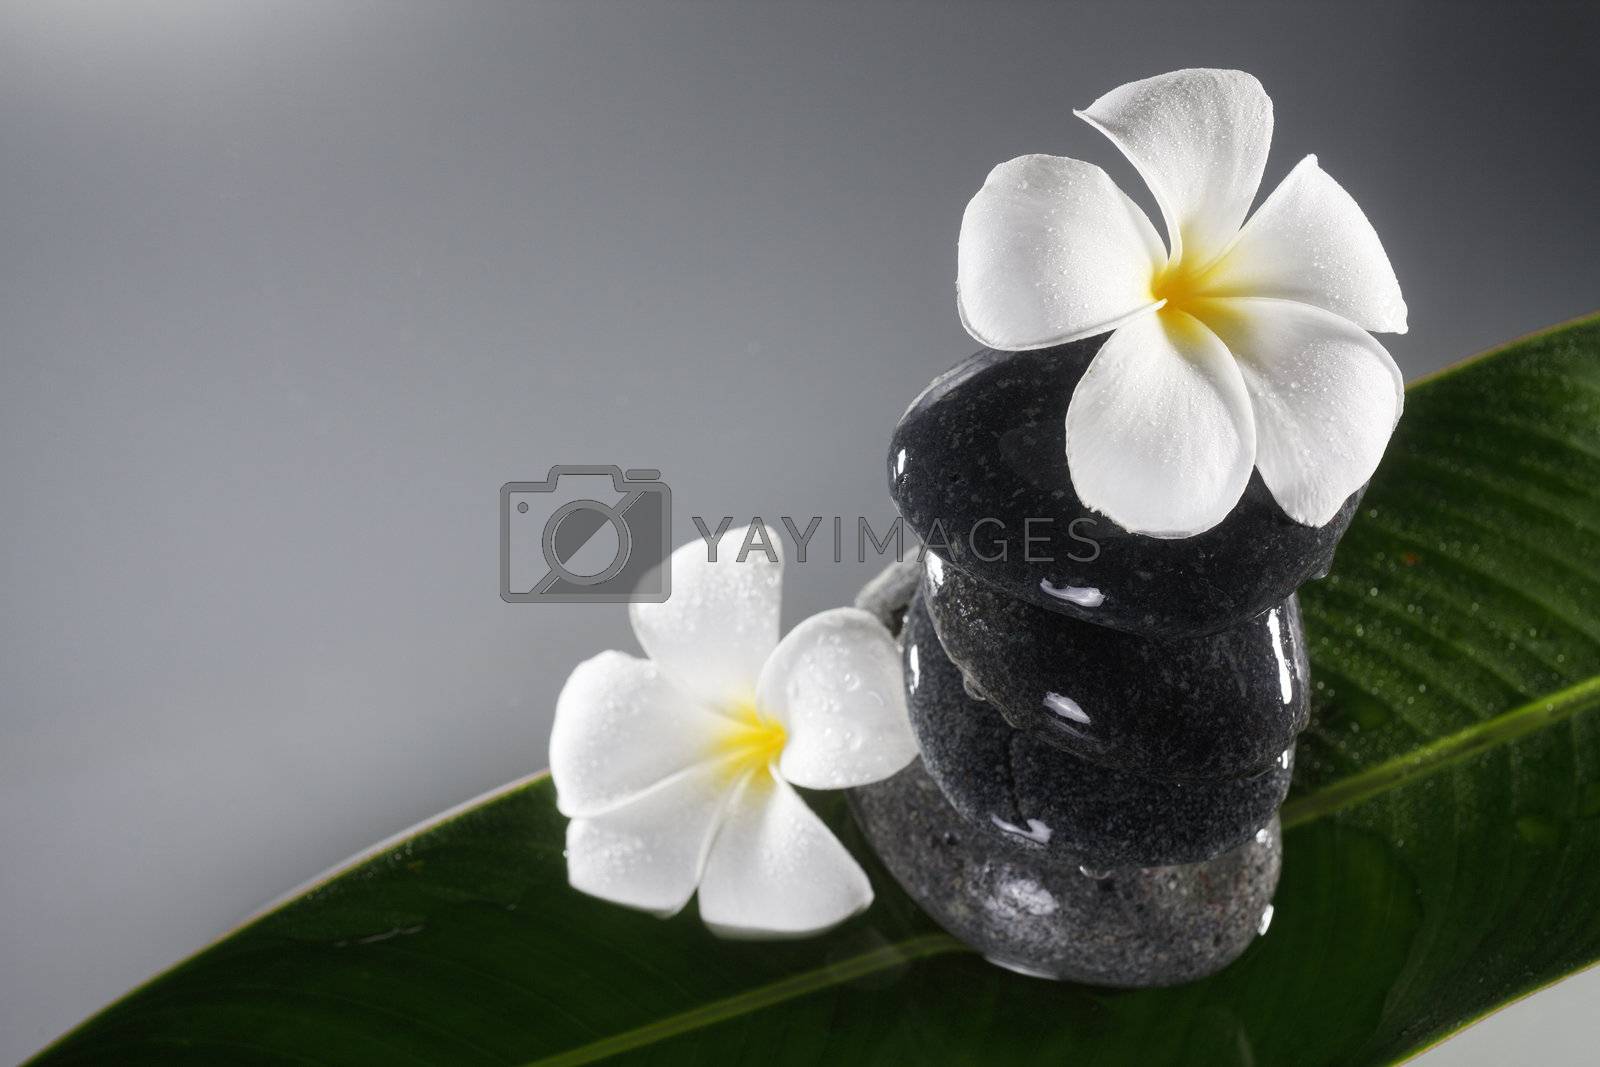 Royalty free image of frangipani by eskaylim